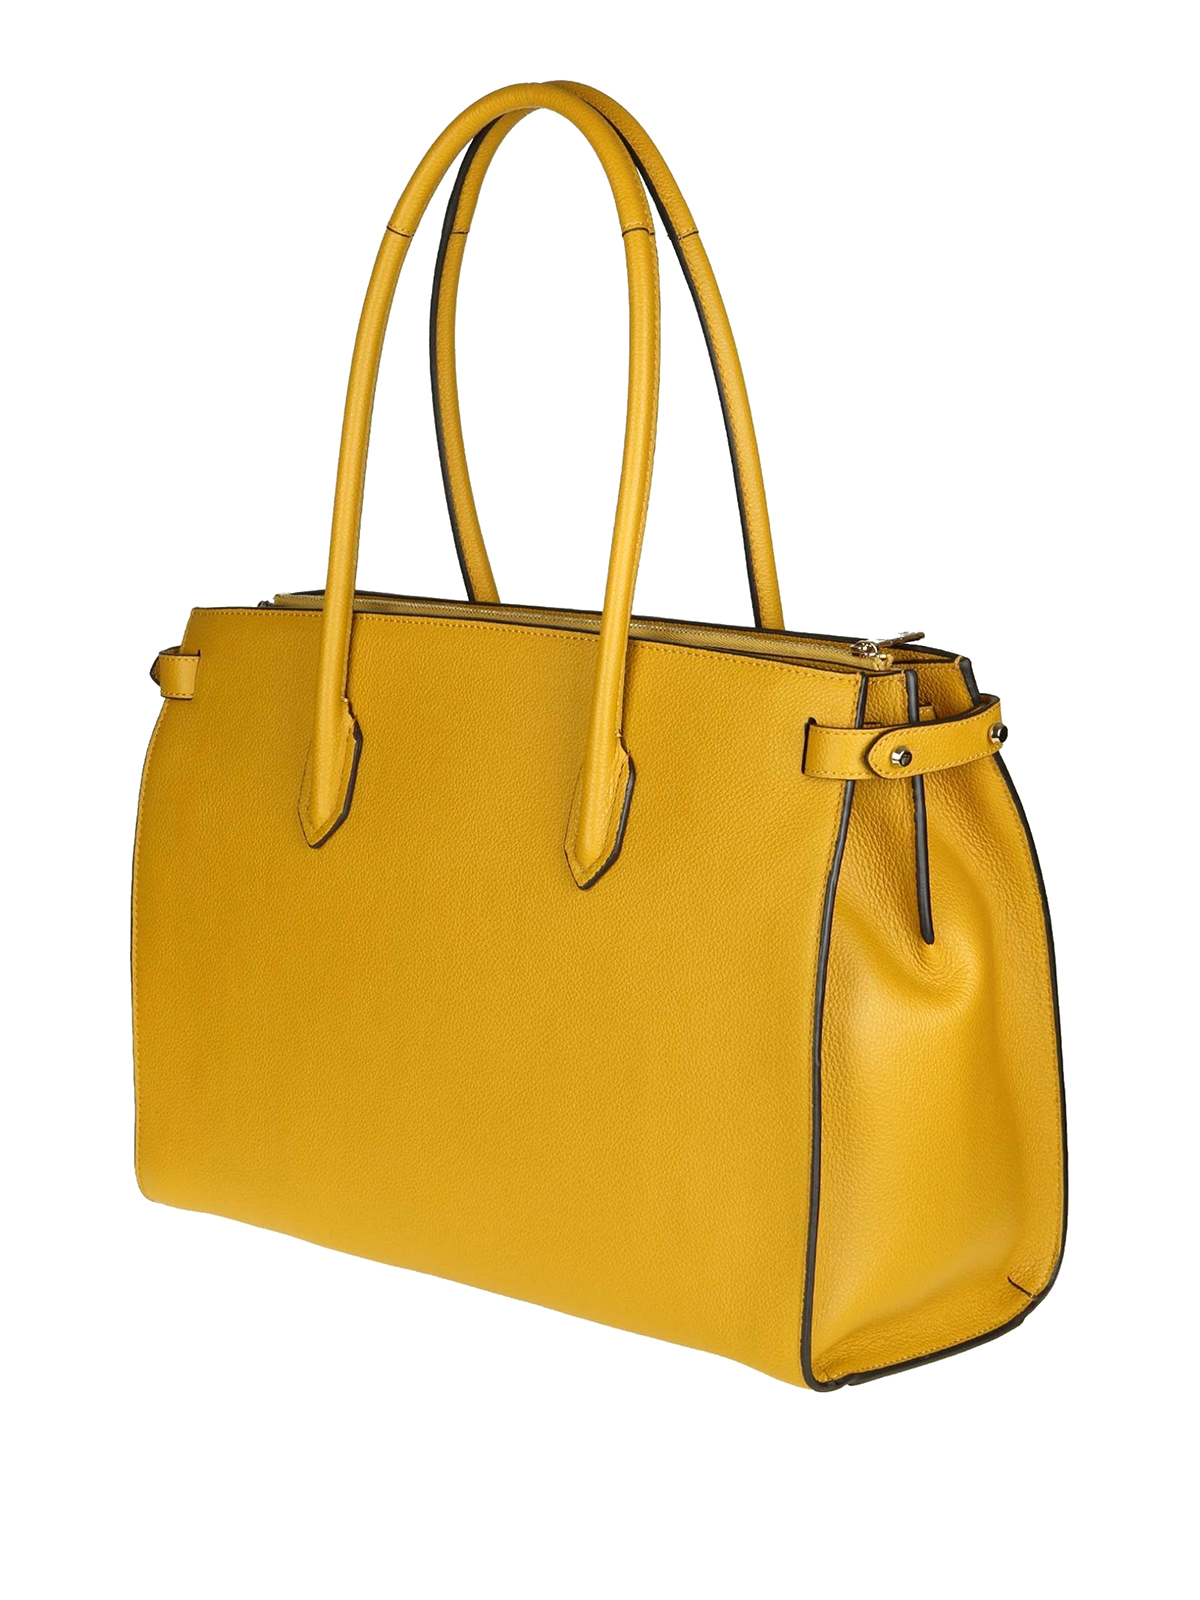 Totes bags Furla - Pin yellow leather medium handbag - 978667 | iKRIX.com